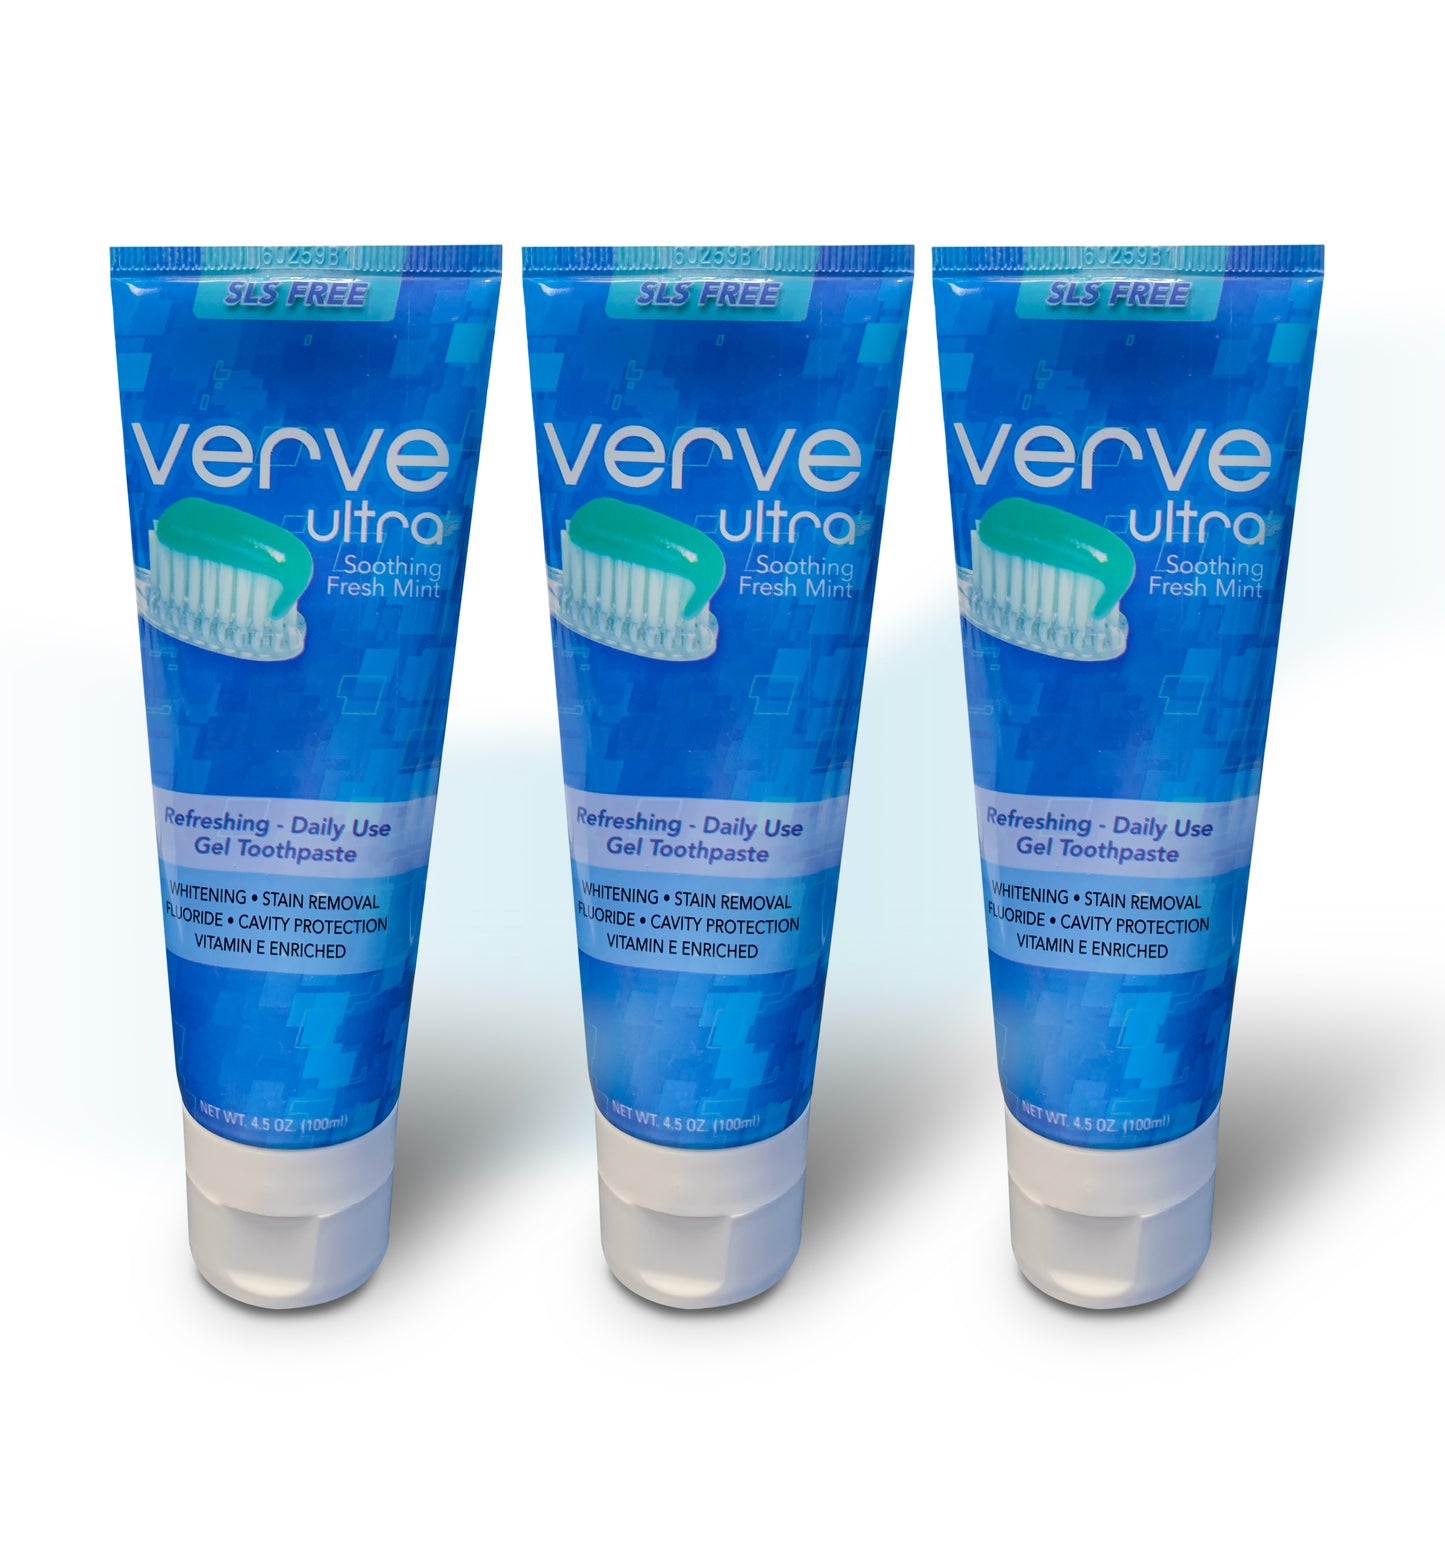 Verve Ultra Toothpaste (4.5 oz) - Three Tubes